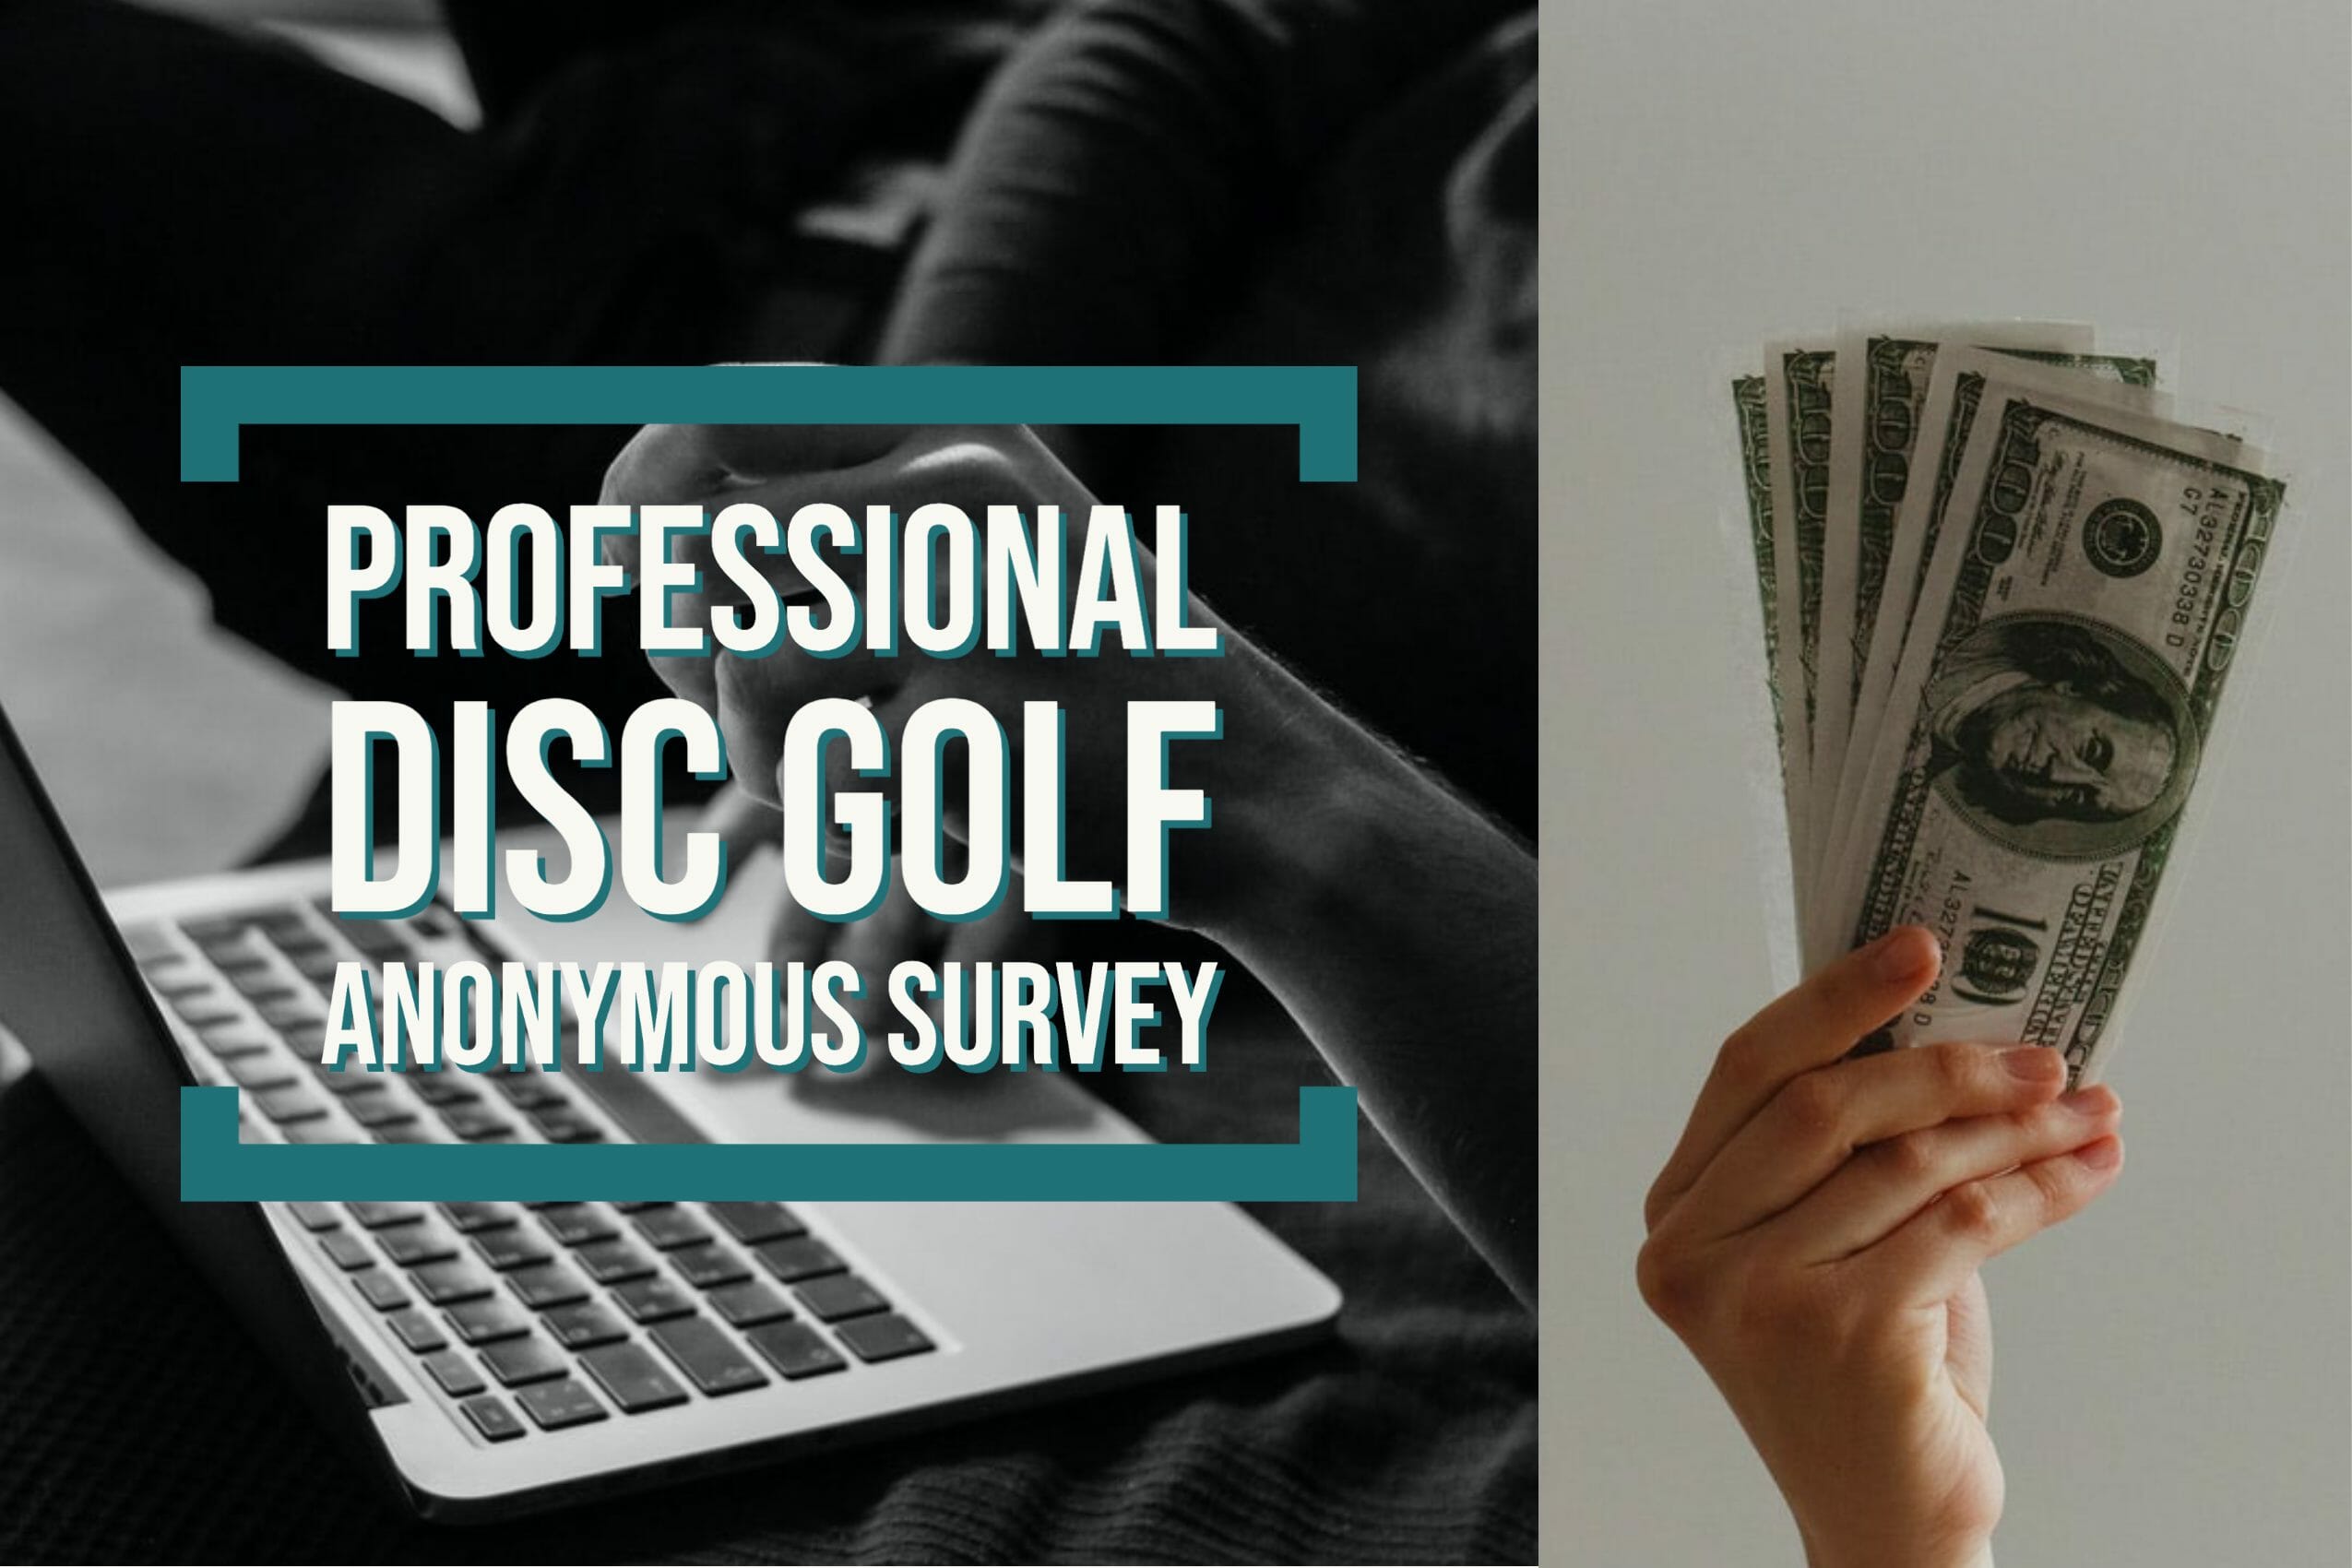 Professional Disc Golf Anonymous Survey Money photo